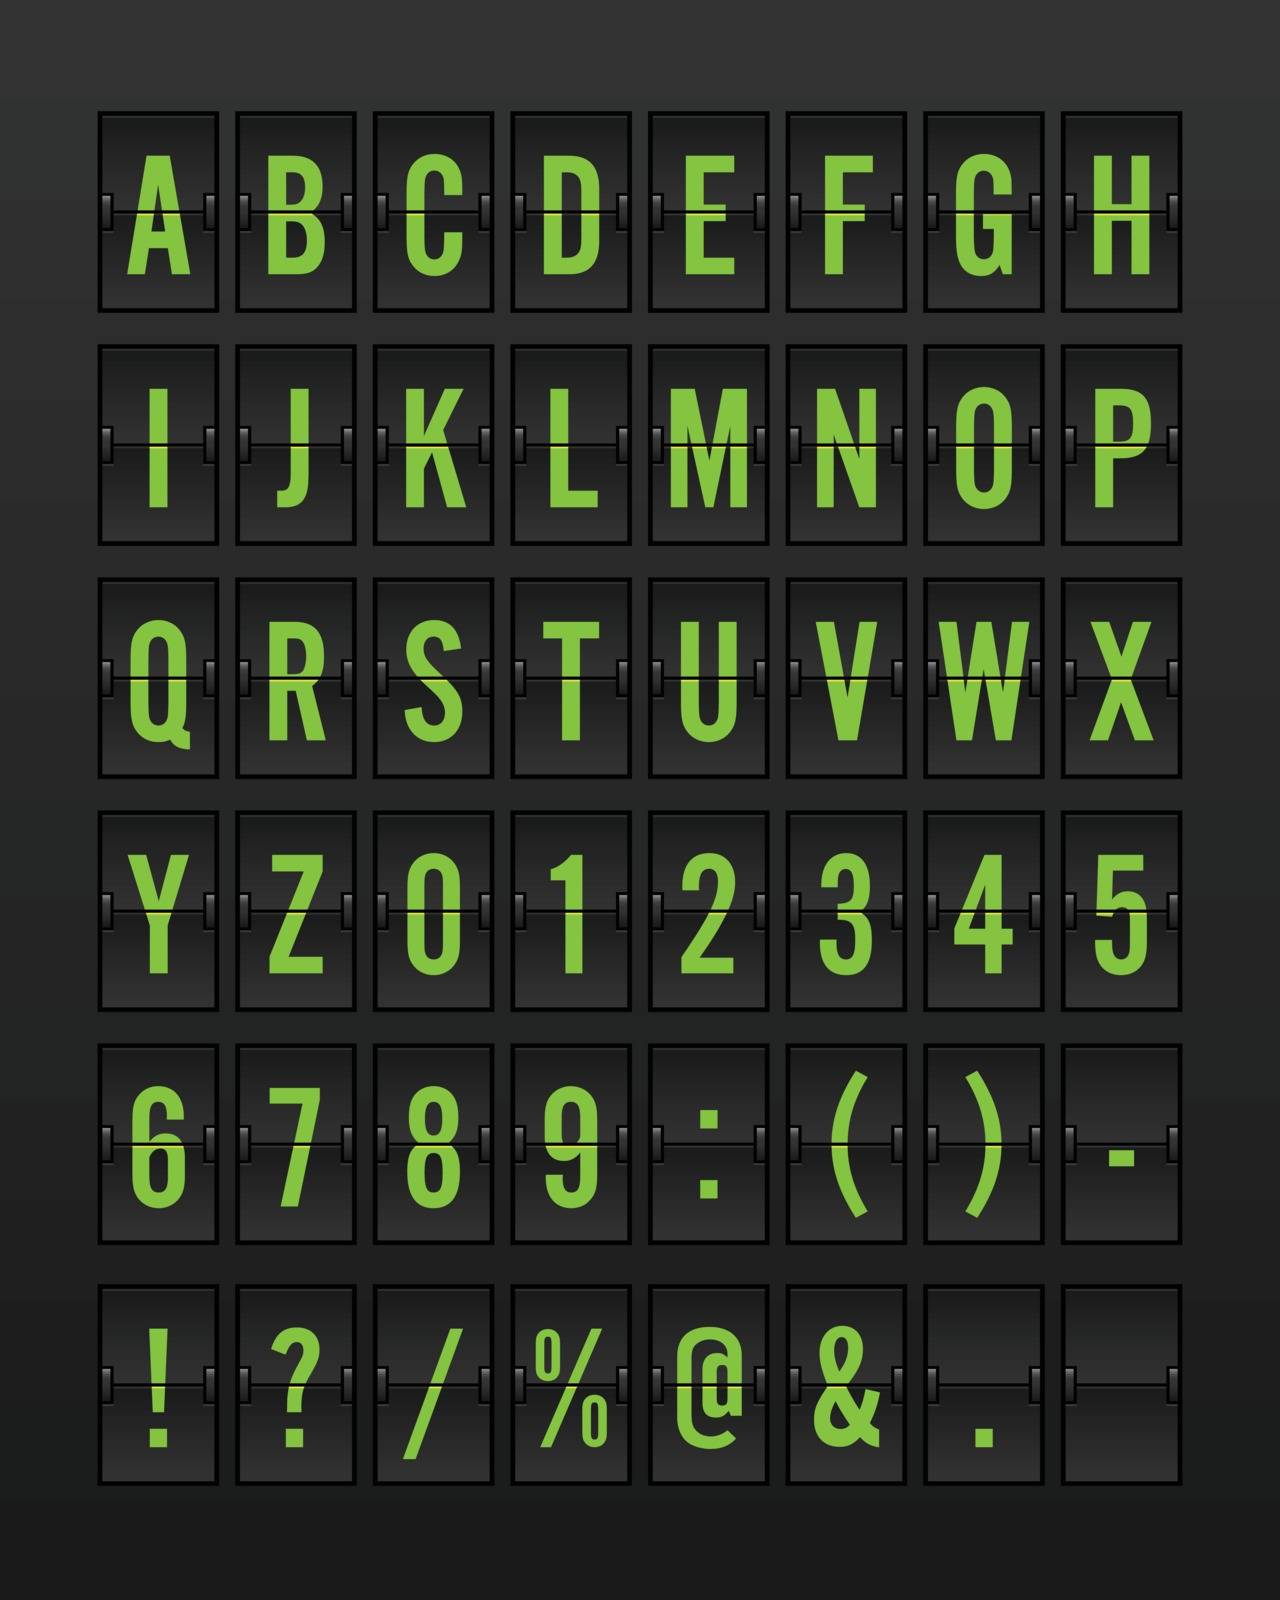 Airport Mechanical Flip Board Panel Font - Green Font on Dark Background Vector Illustration